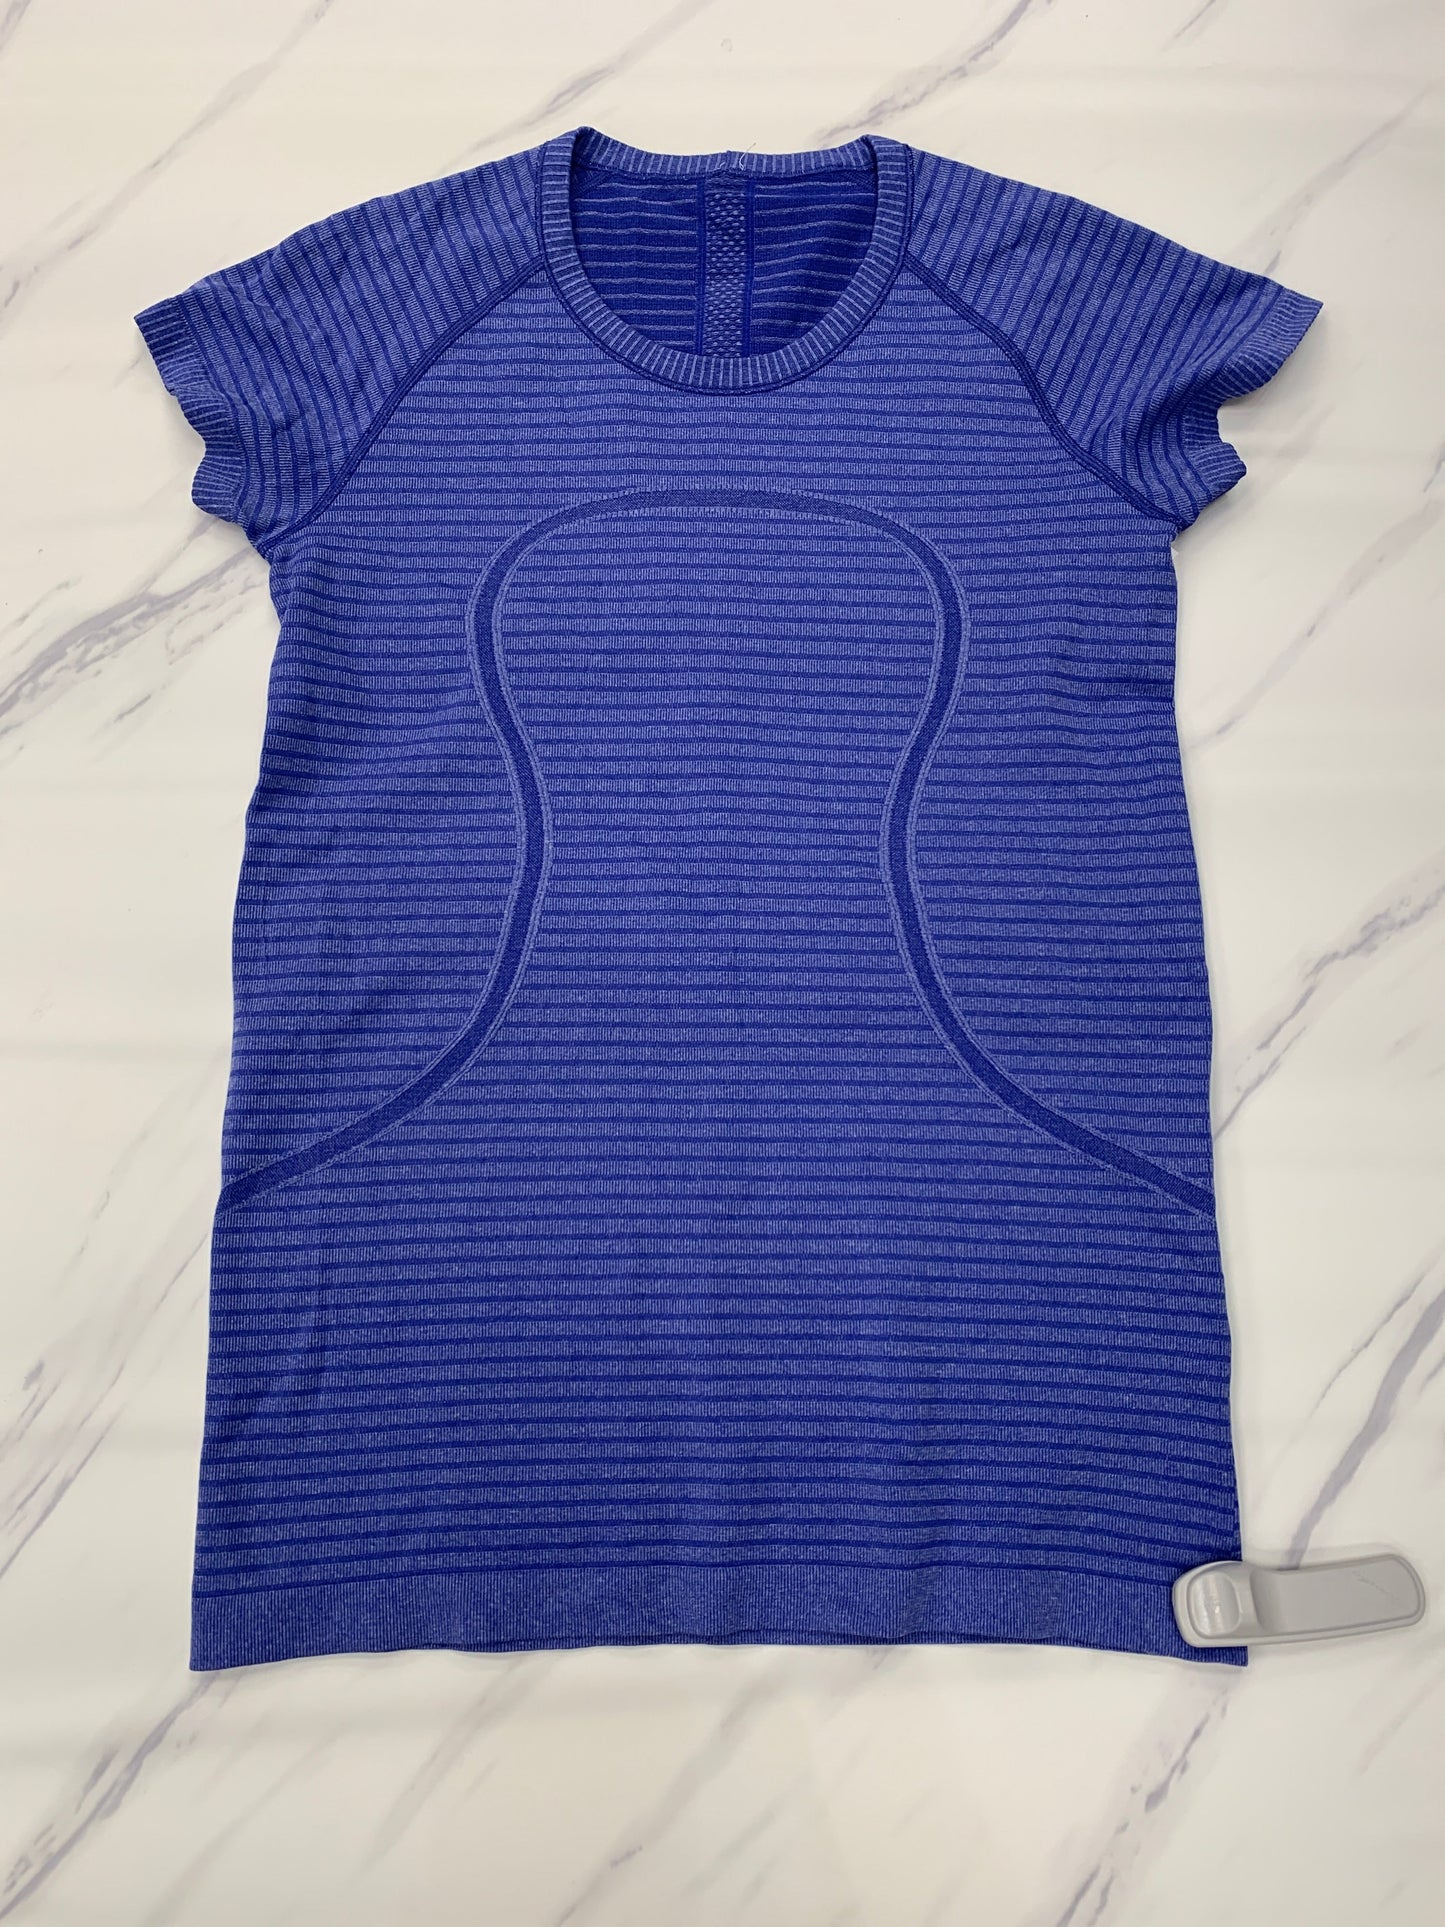 Purple Athletic Top Short Sleeve Lululemon, Size 8